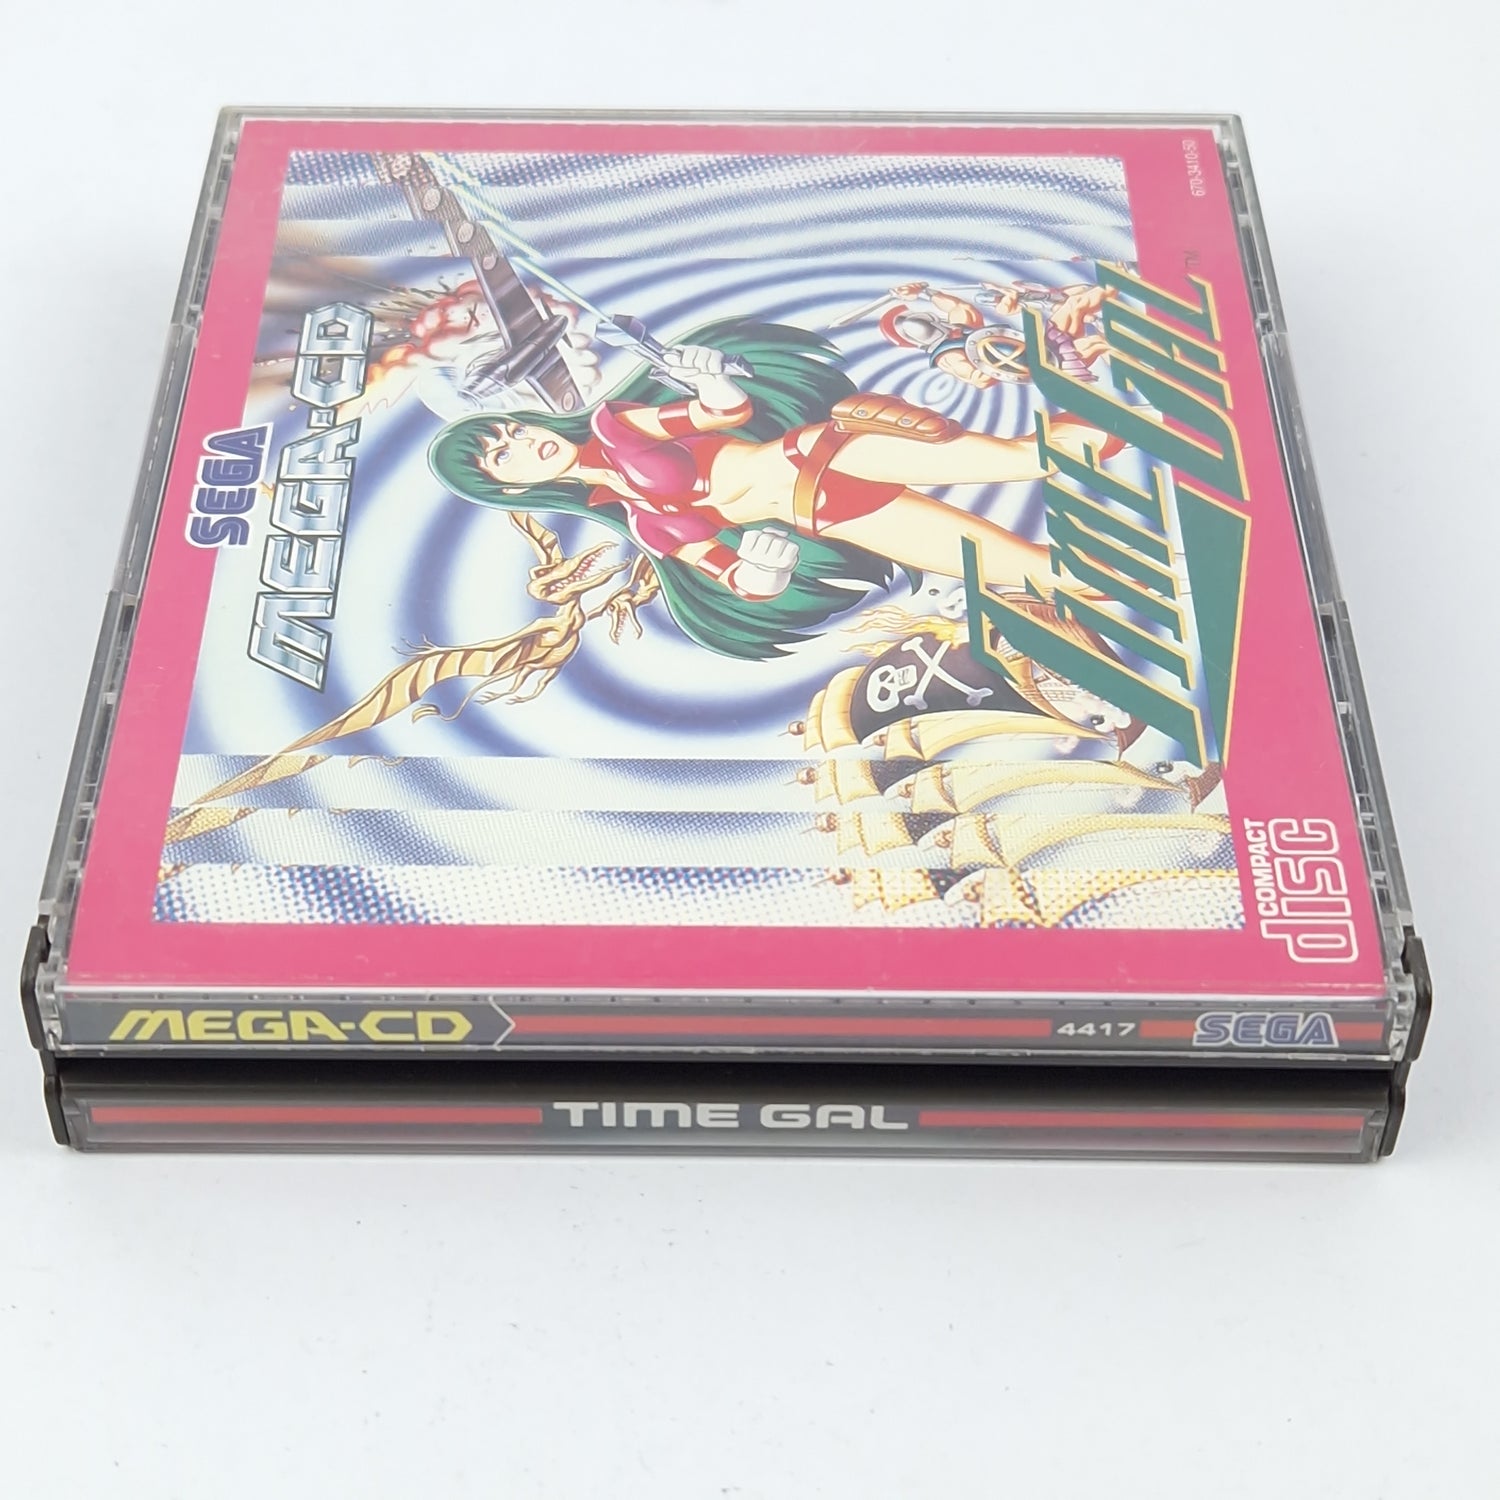 Sega Mega CD Game: Time Gal - CD Instructions OVP / PAL MCD Game